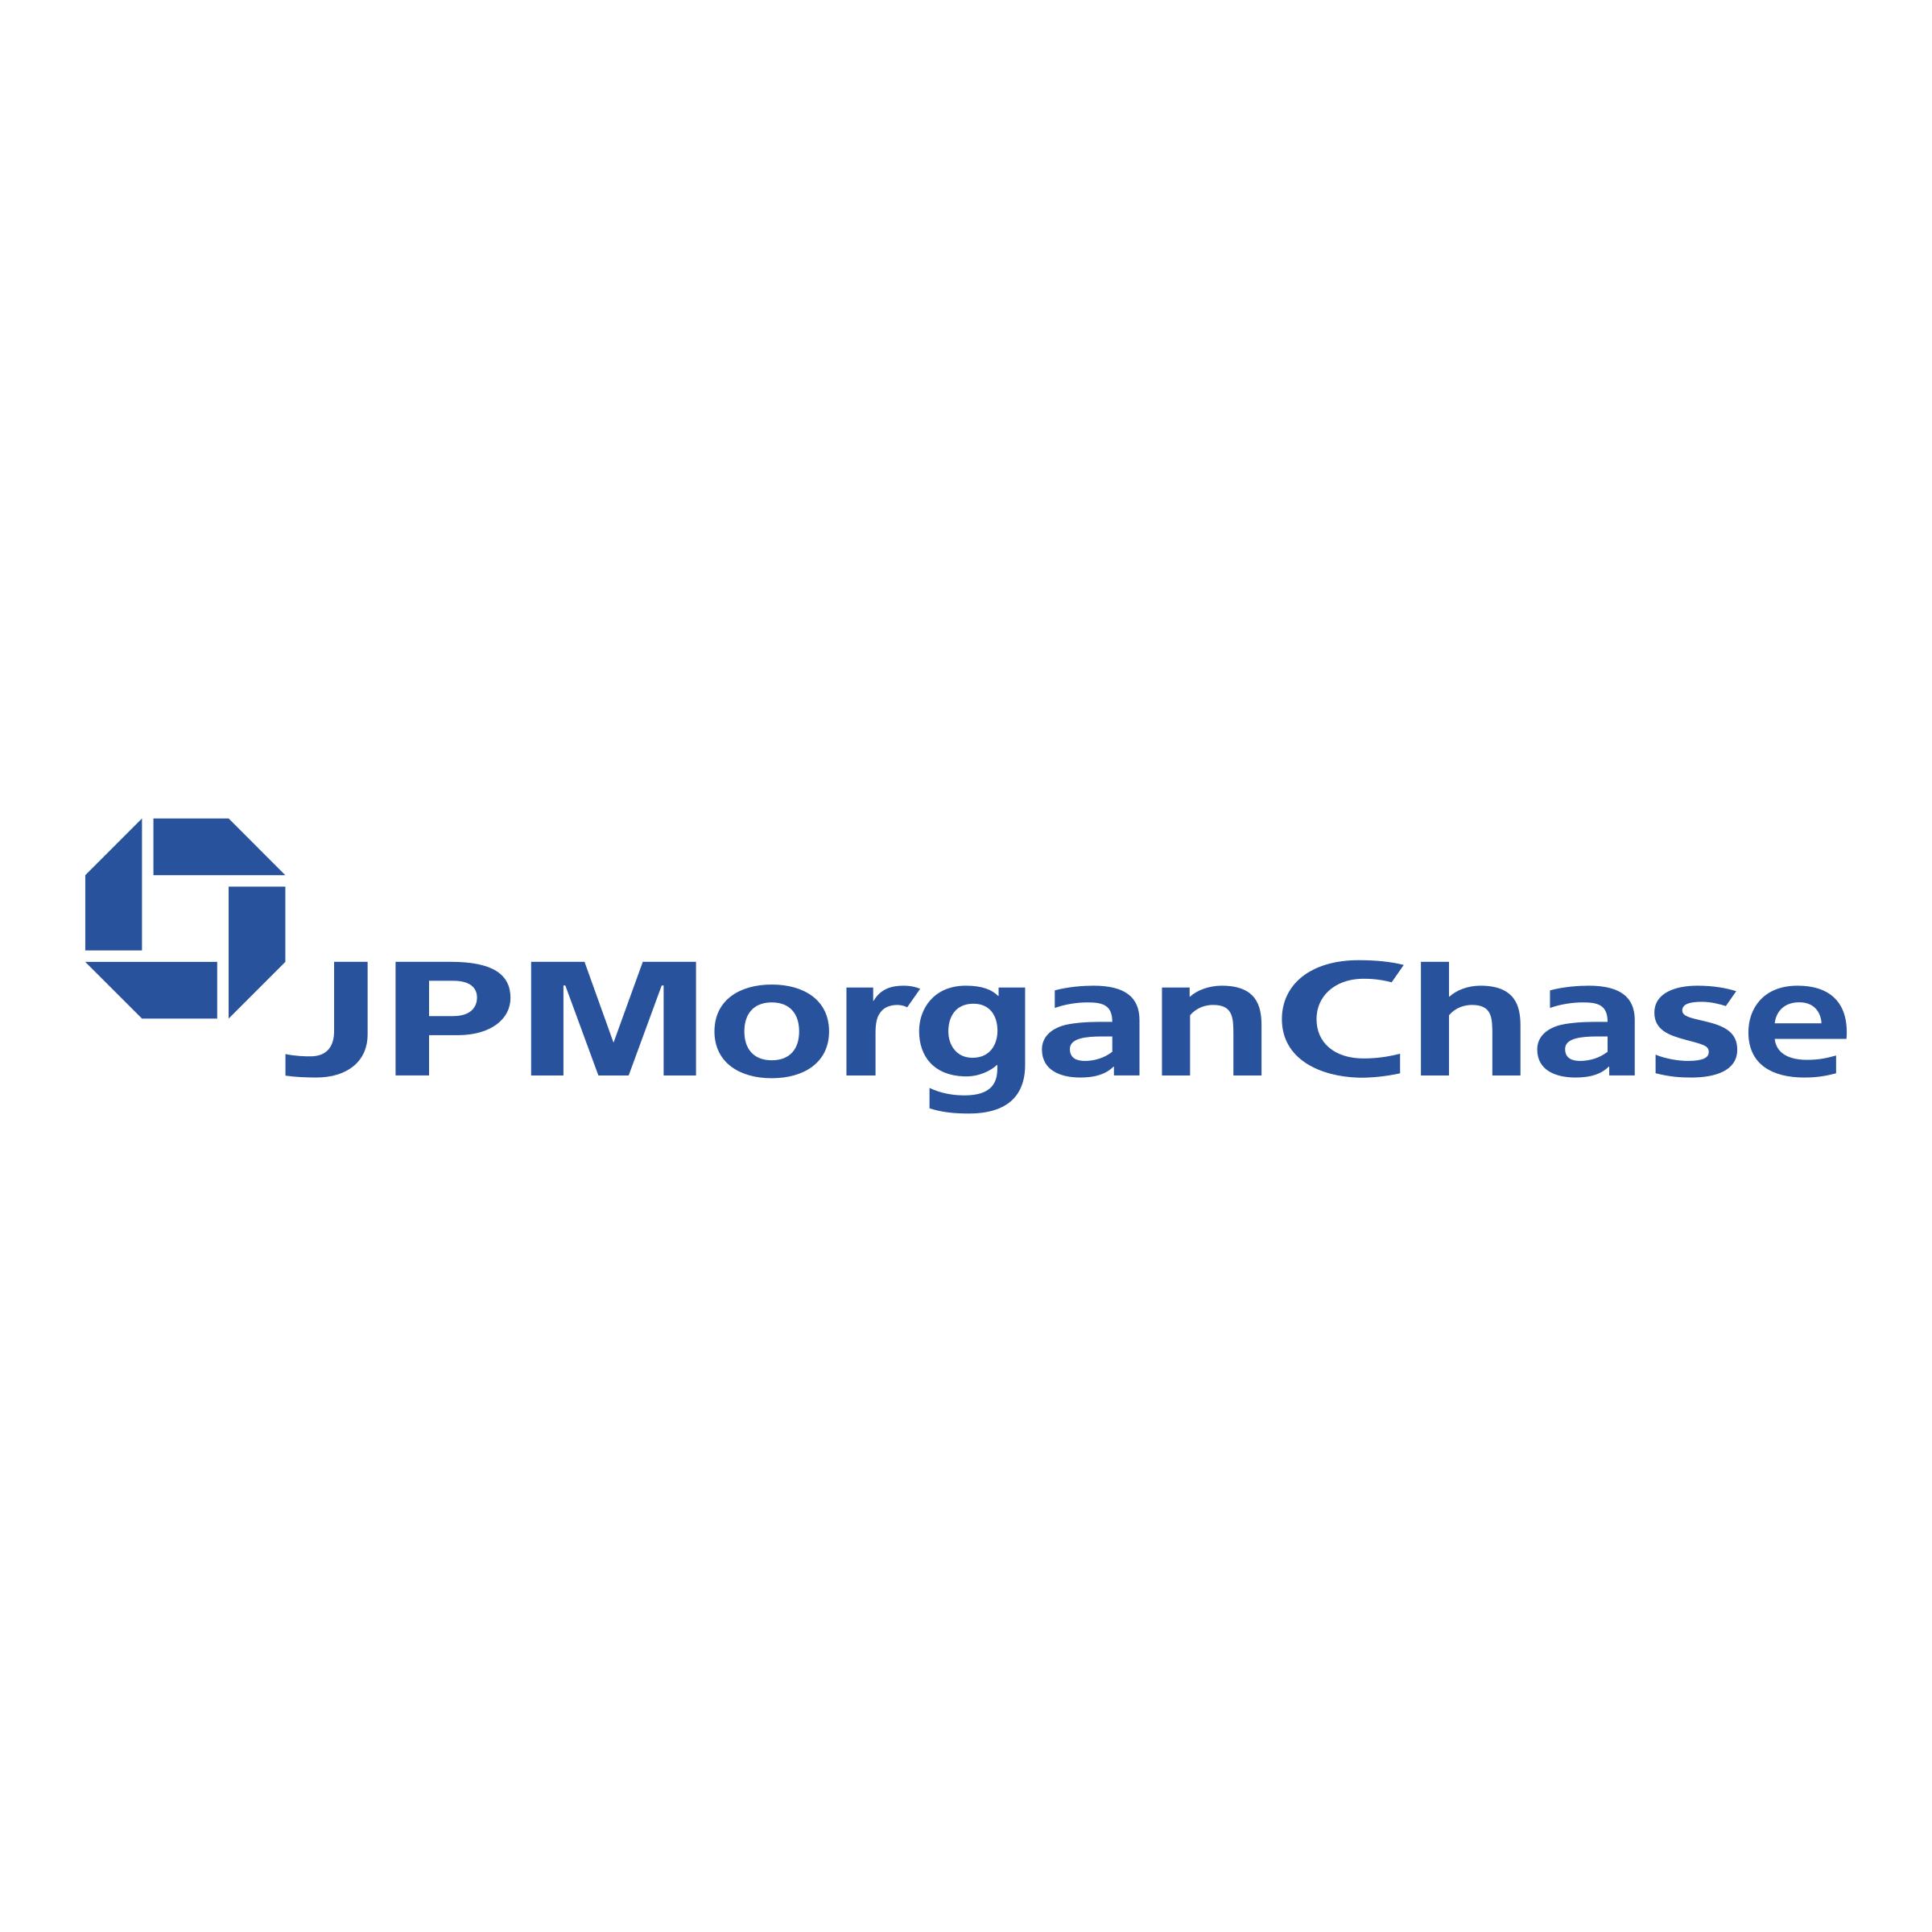 Chase.com Logo - JPMorgan Chase Logo PNG Transparent & SVG Vector - Freebie Supply